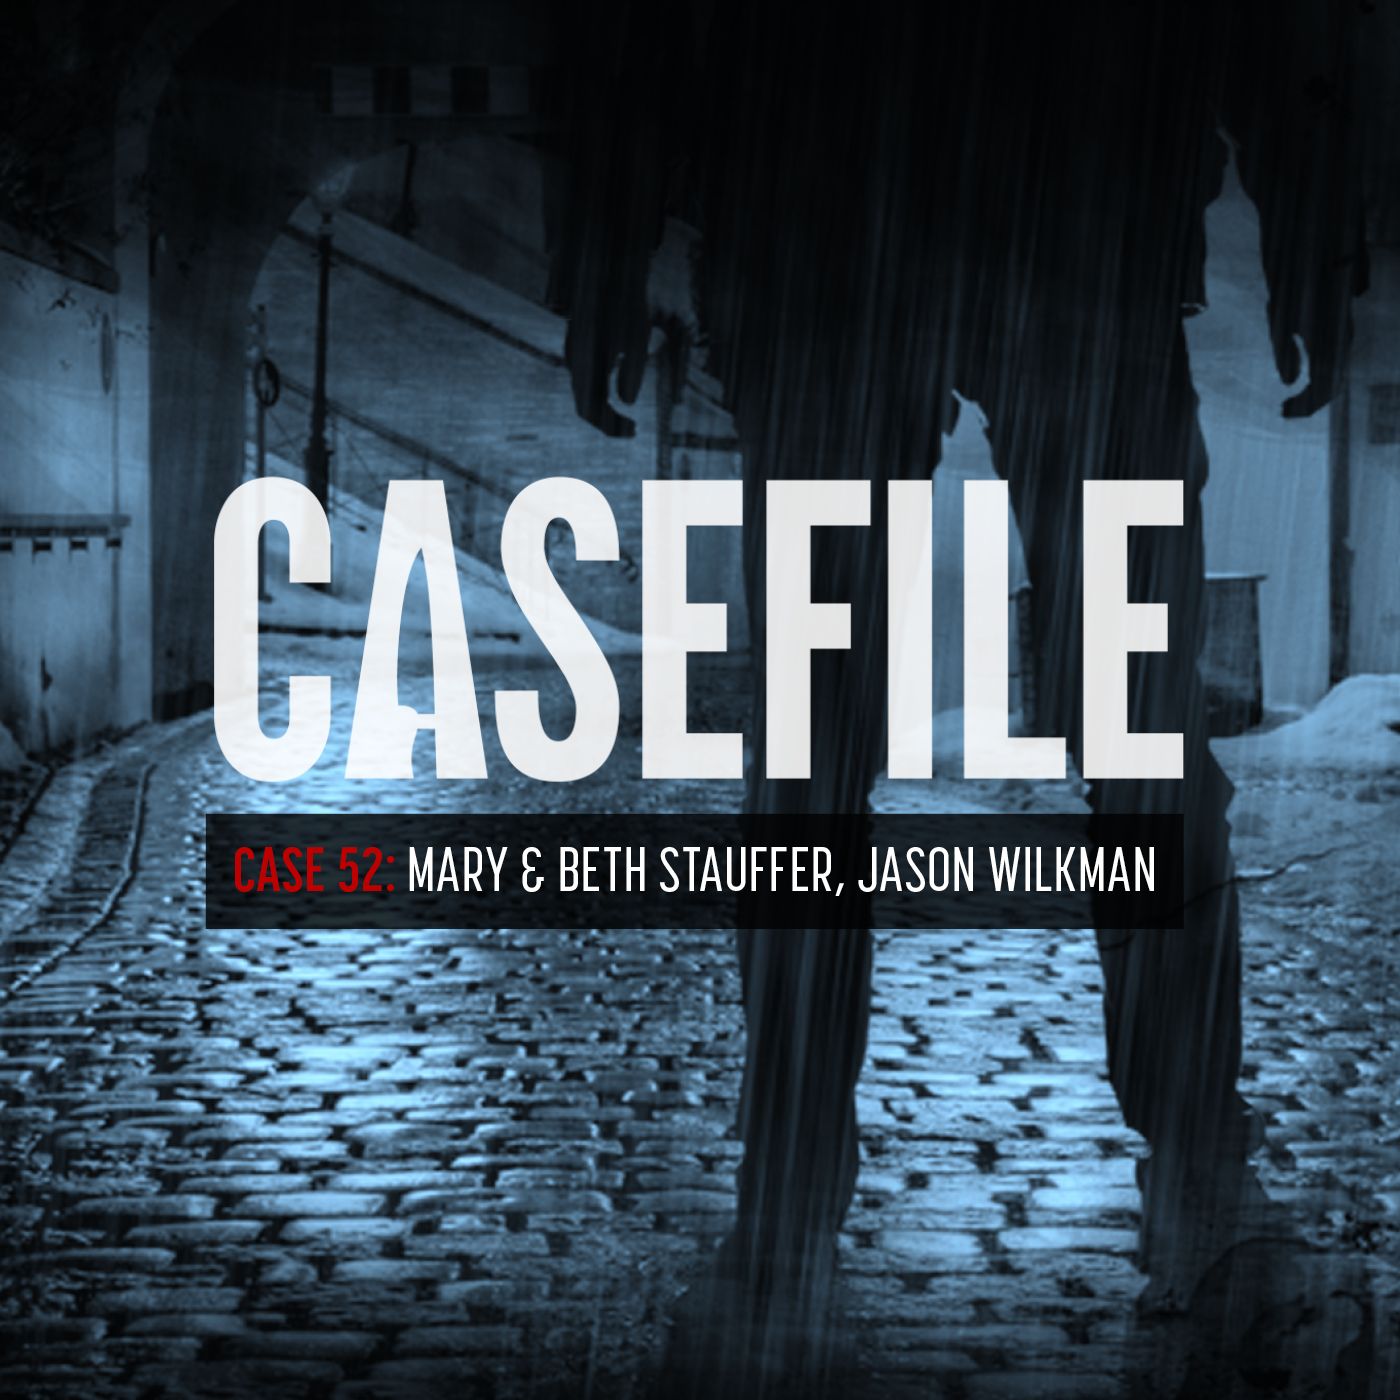 Case 52: Mary & Beth Stauffer, Jason Wilkman